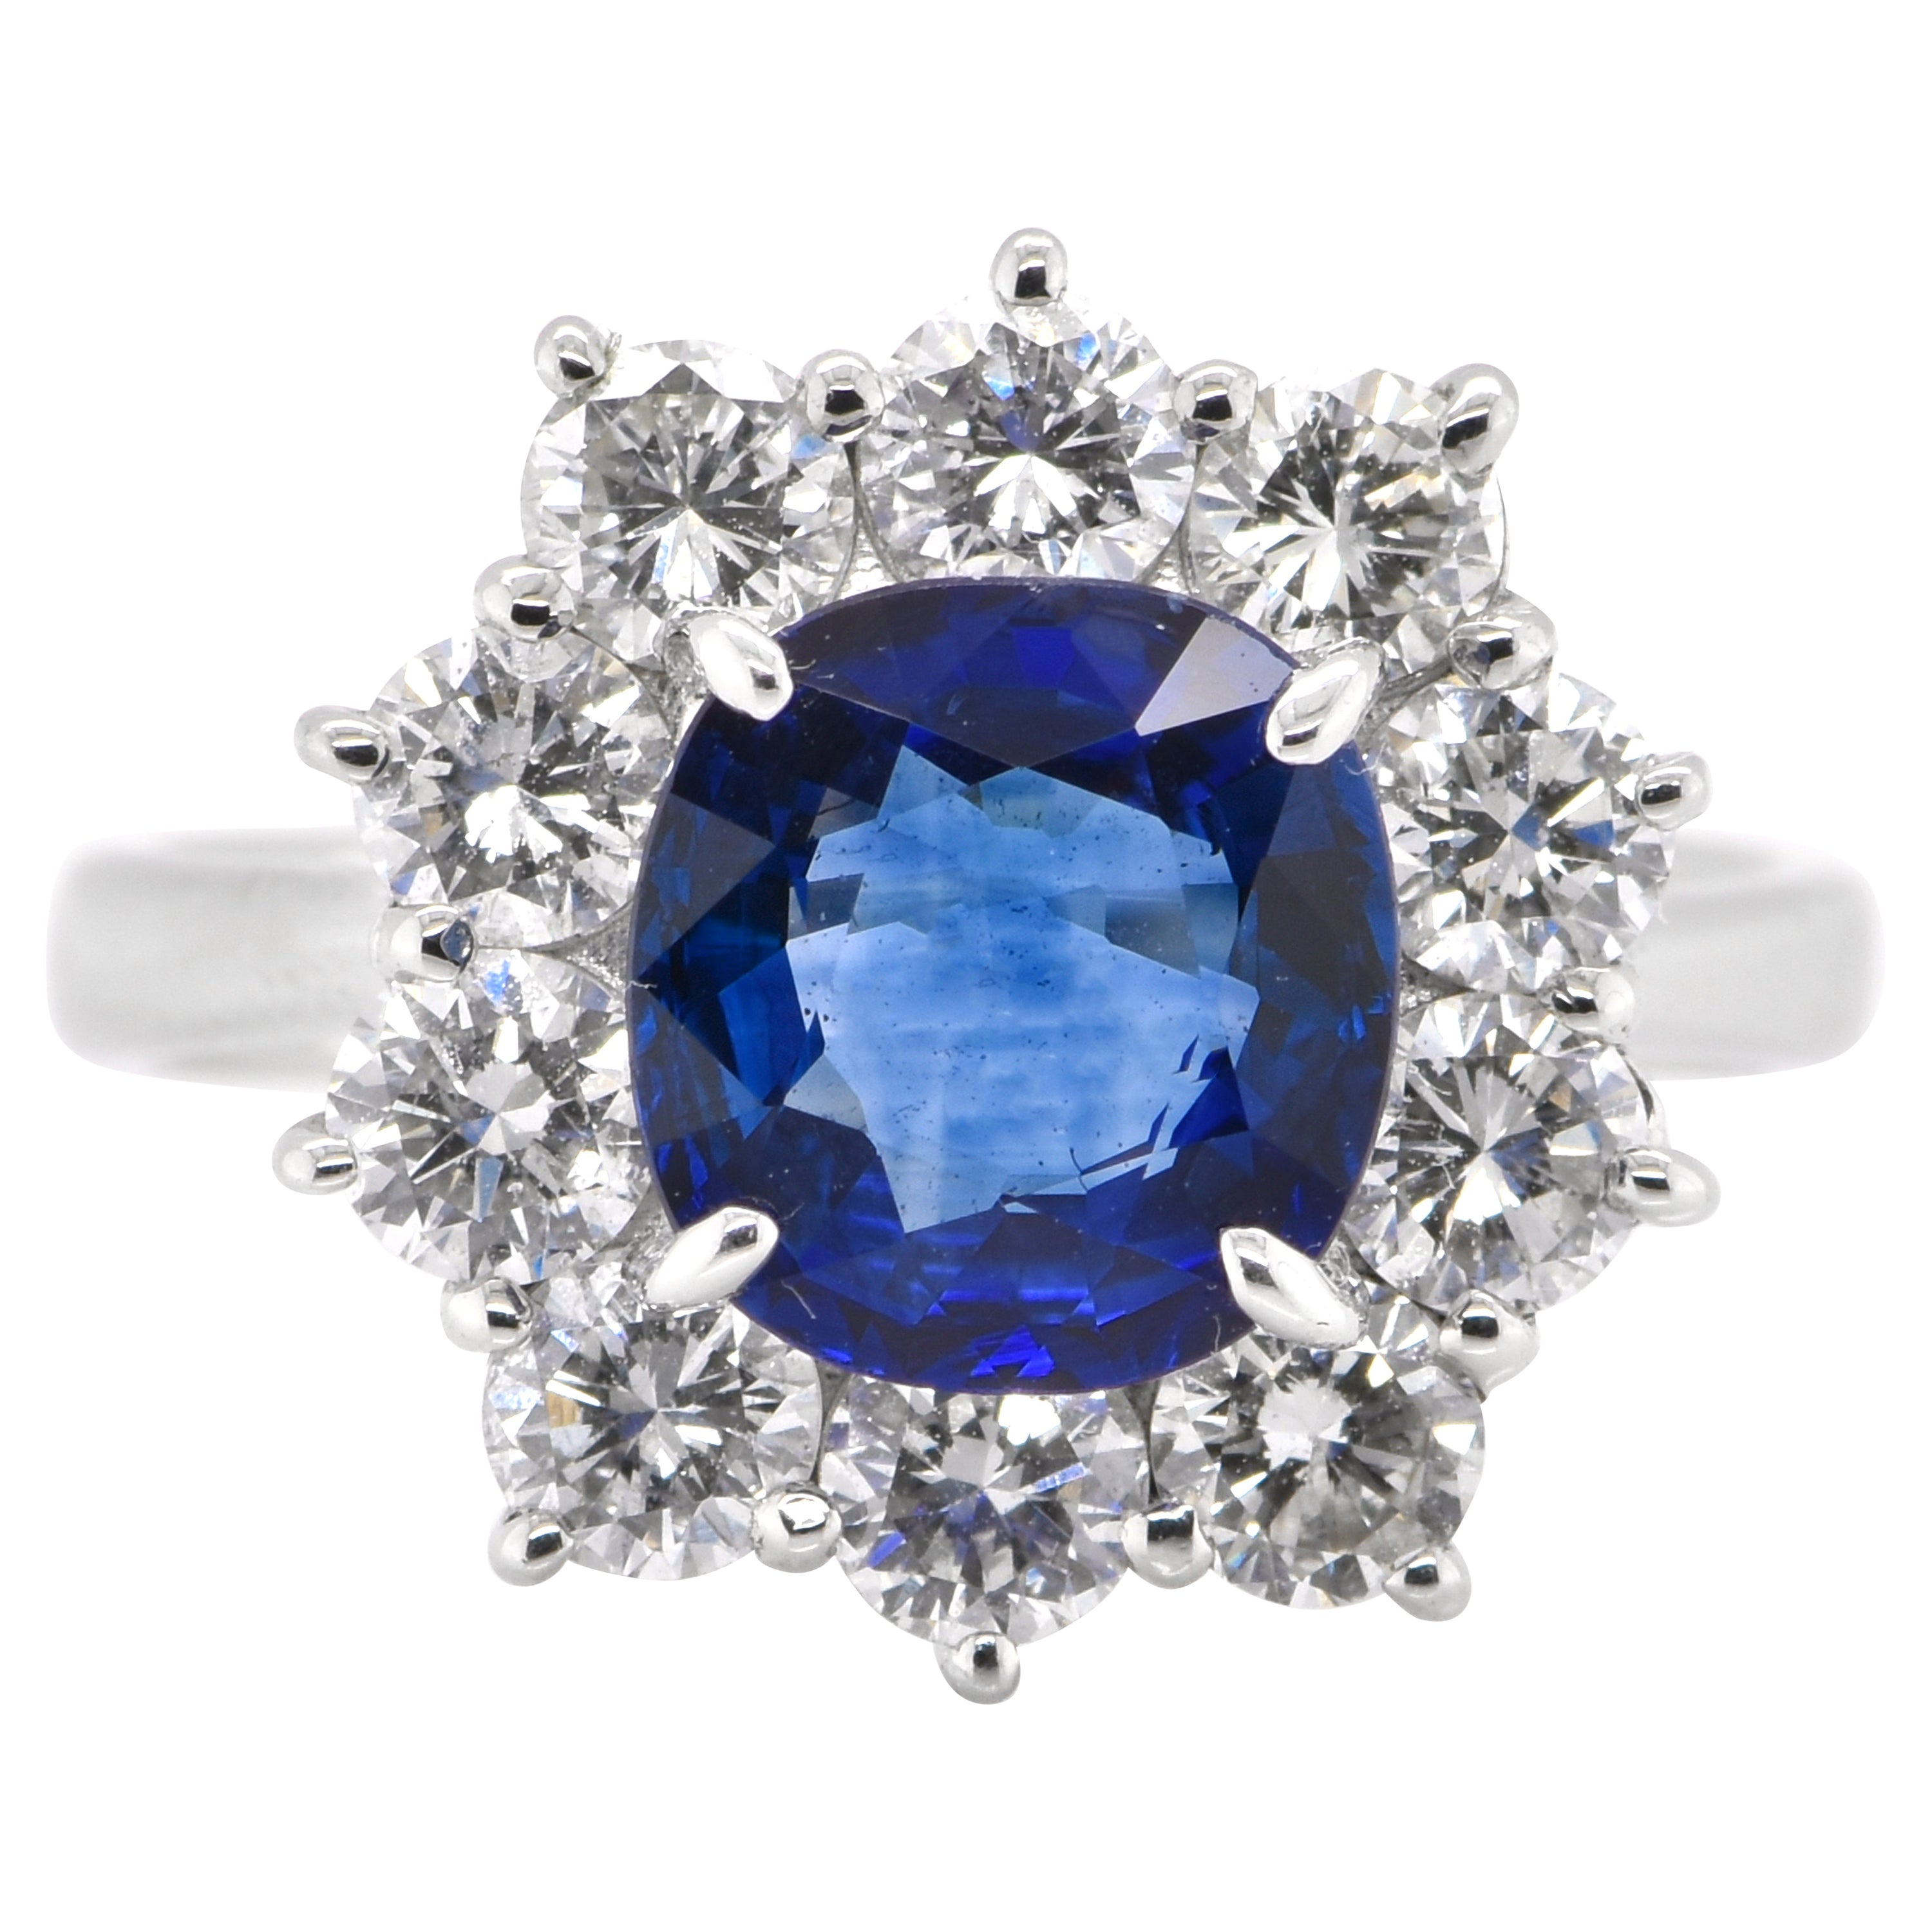 2.33 Carat Natural Sapphire and Diamond Halo Ring Set in Platinum